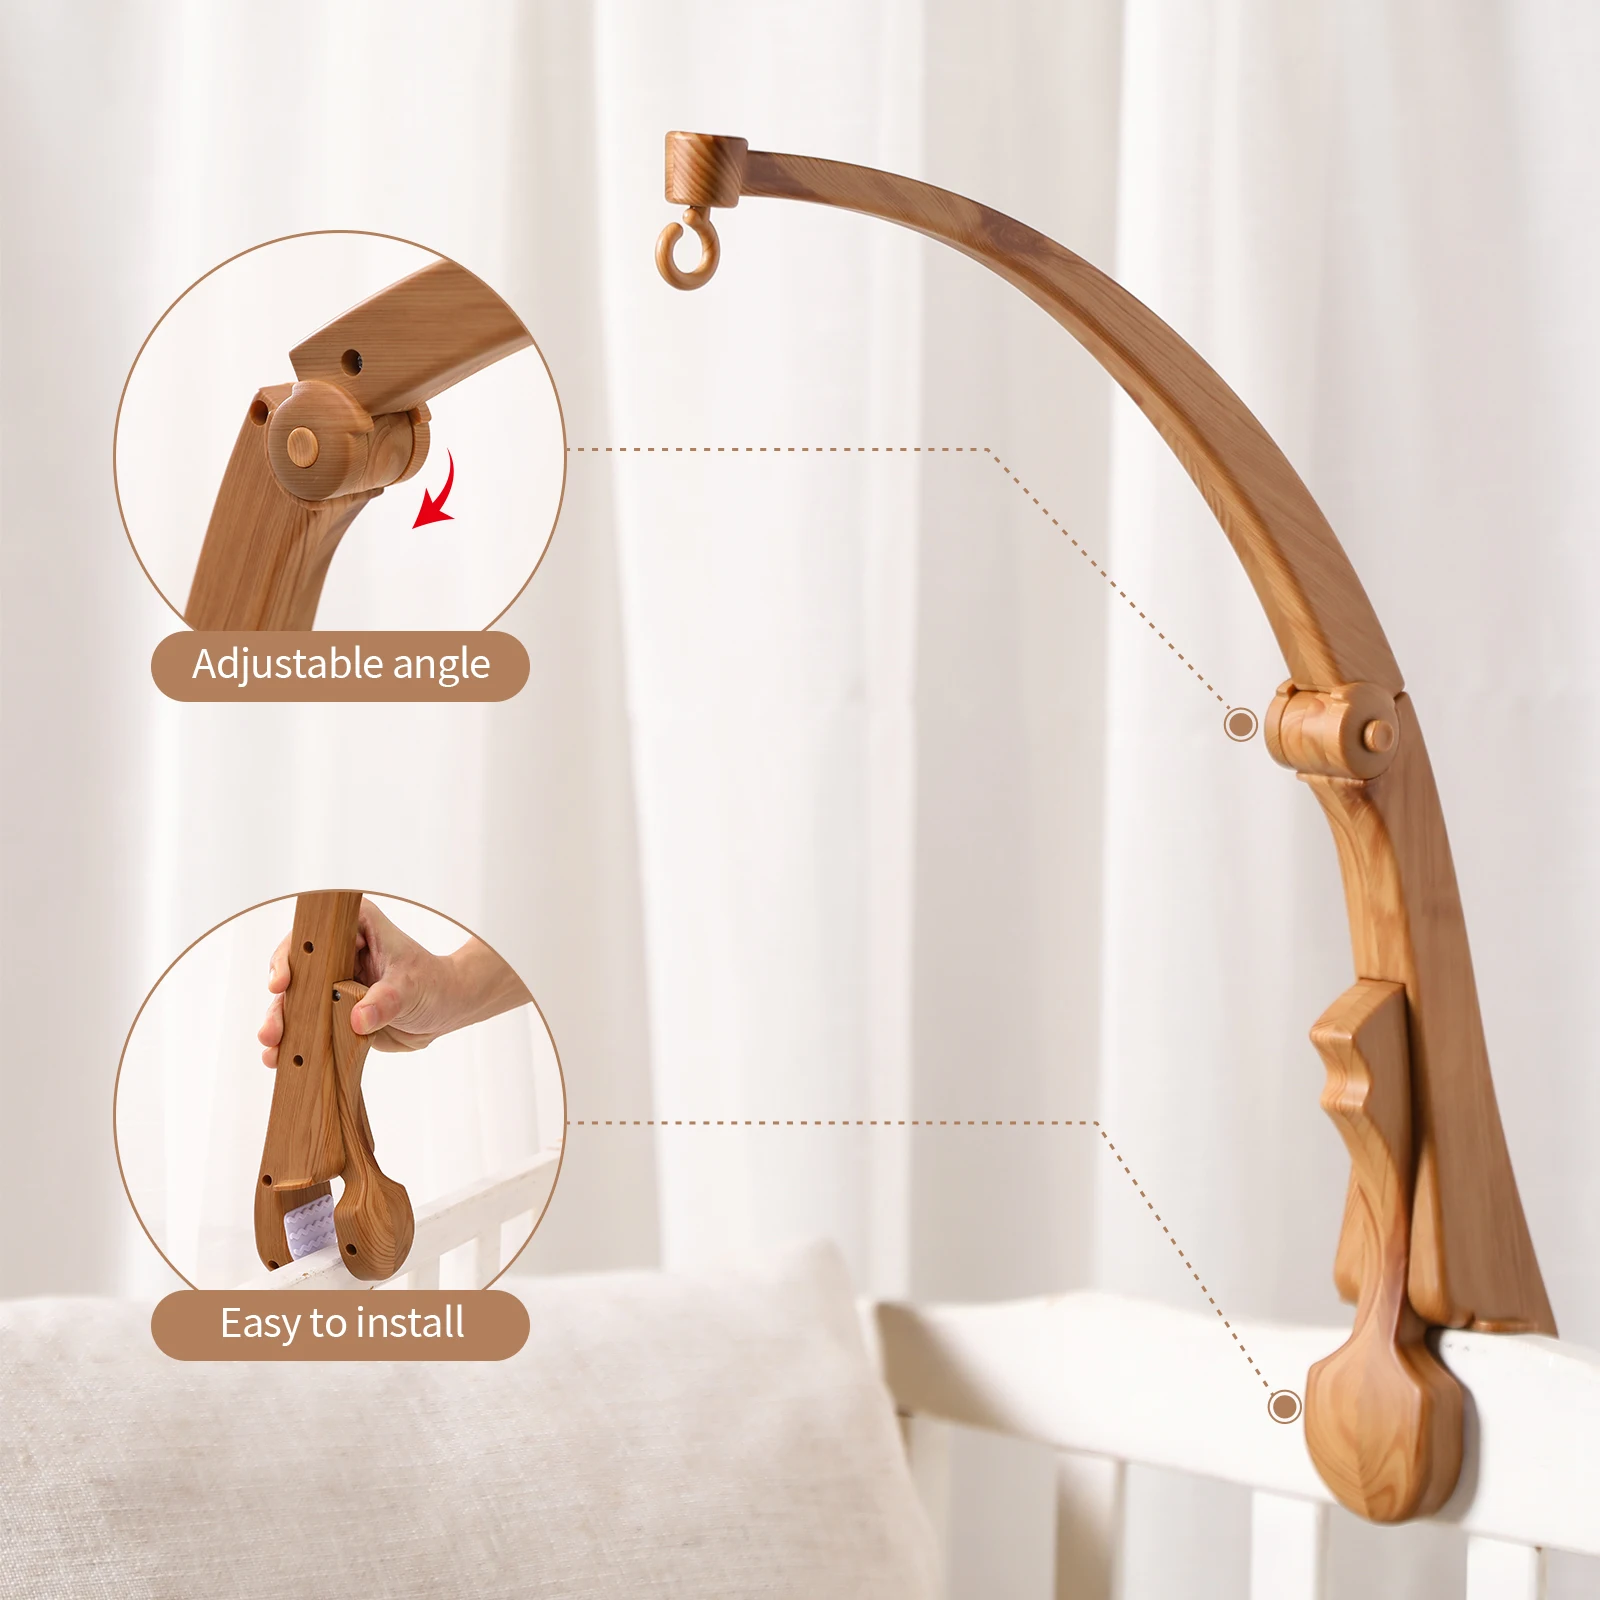 DIY Baby Crib Bed Bell Holder Arm Toy Imitation Wood Grain Infant Bed Decoration Toys Rotating Music Box Nut Screw Arm Bracket